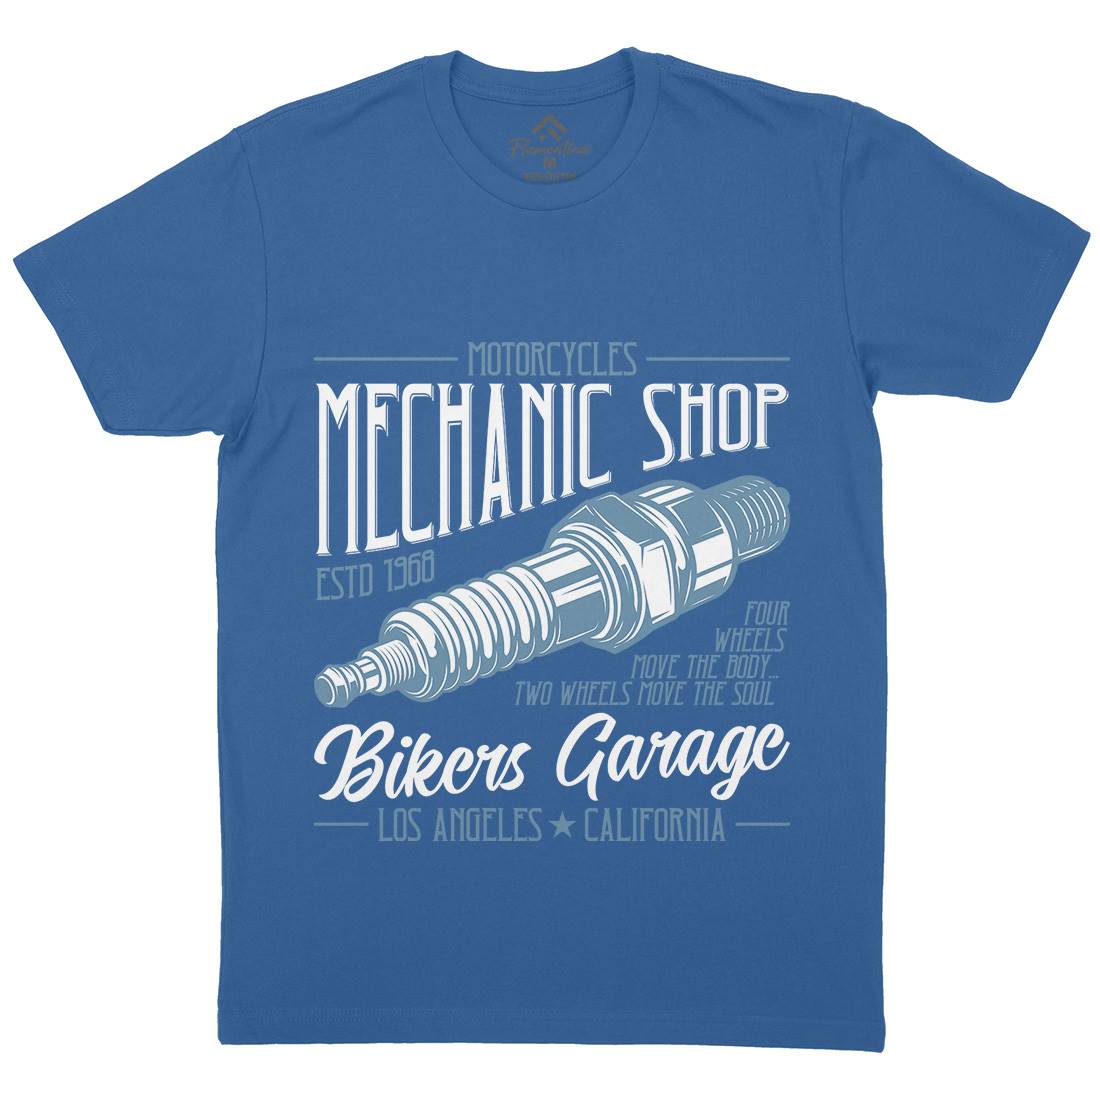 Mechanic Shop Mens Crew Neck T-Shirt Motorcycles B836